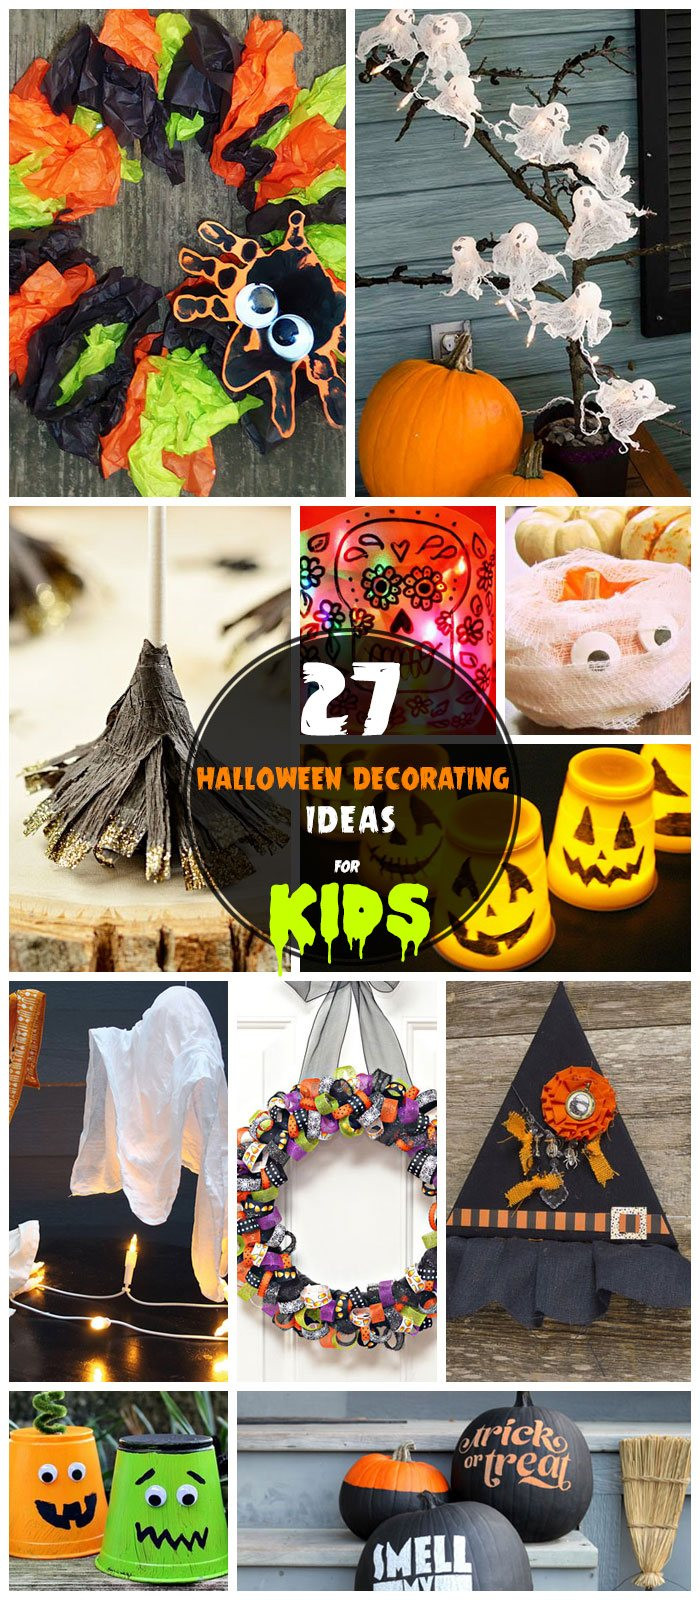 DIY Halloween Decorations For Kids
 25 DIY Halloween Decorating Ideas for Kids